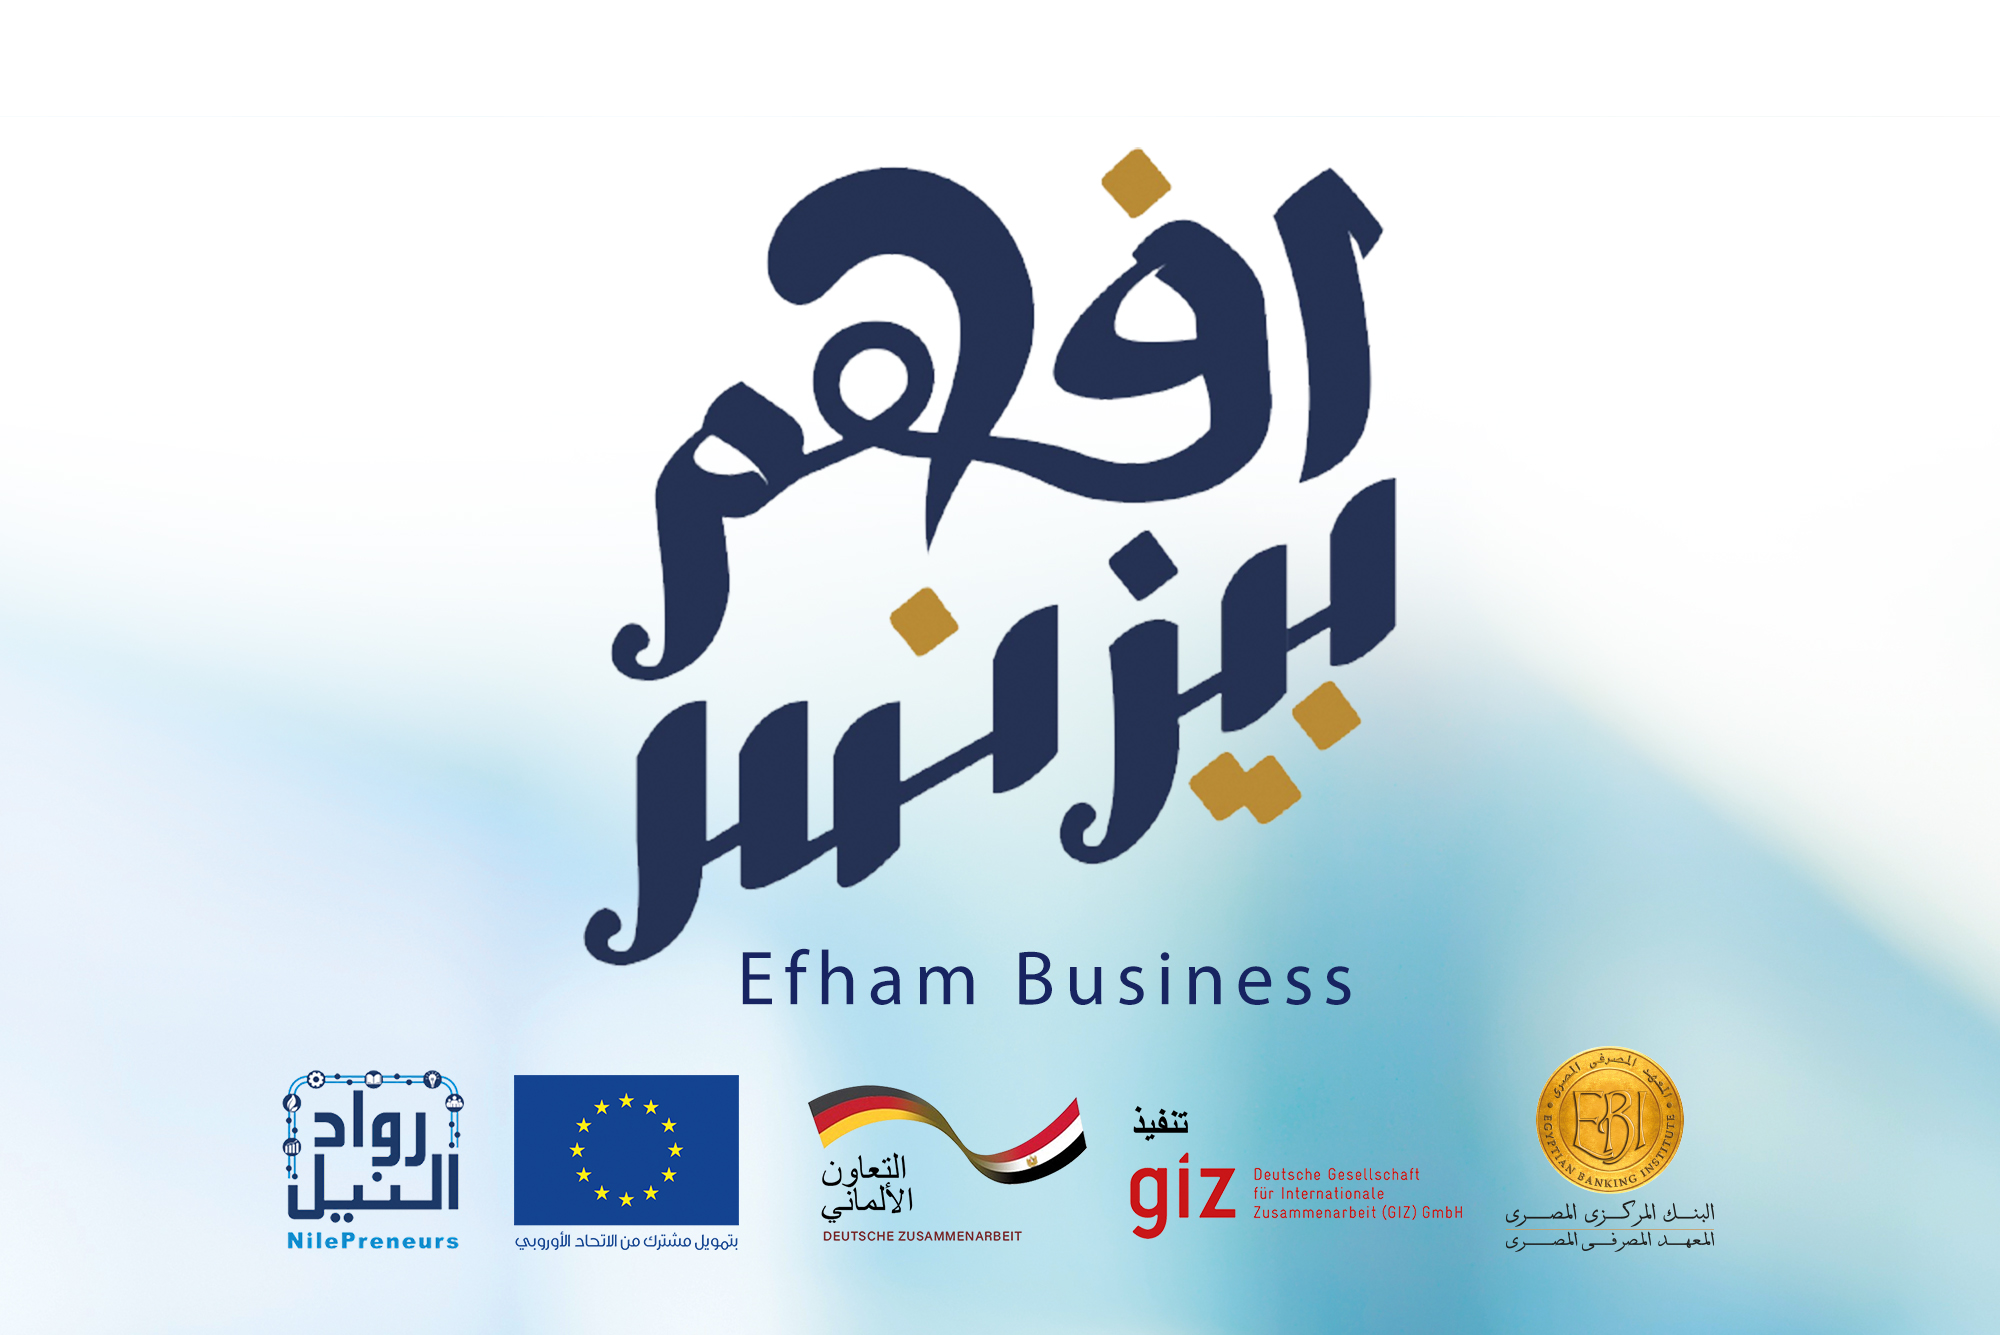 Efham Business